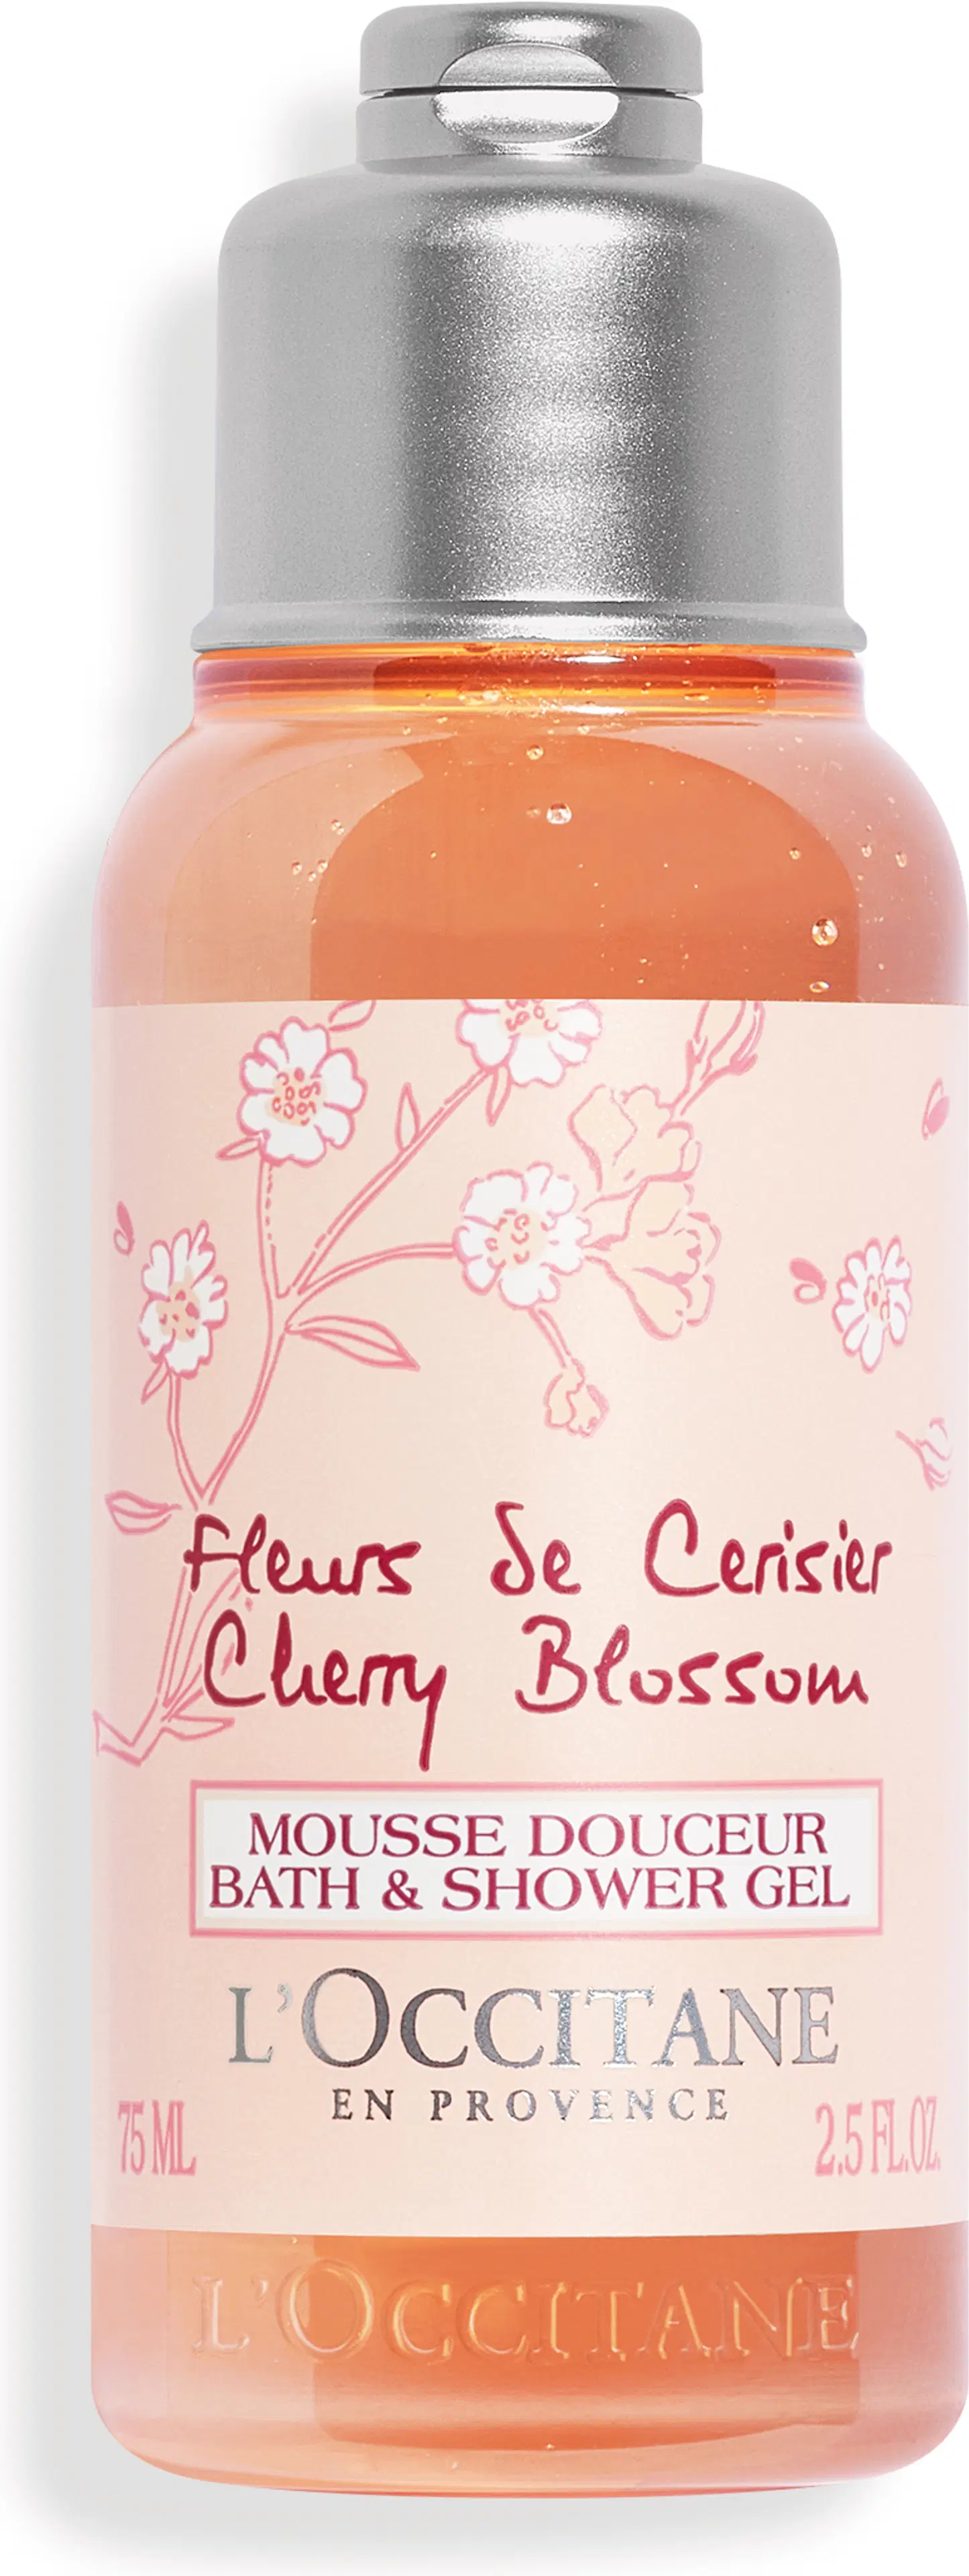 L'Occitane Cherry Blossom Bath & Shower Gel suihkugeeli 75 ml